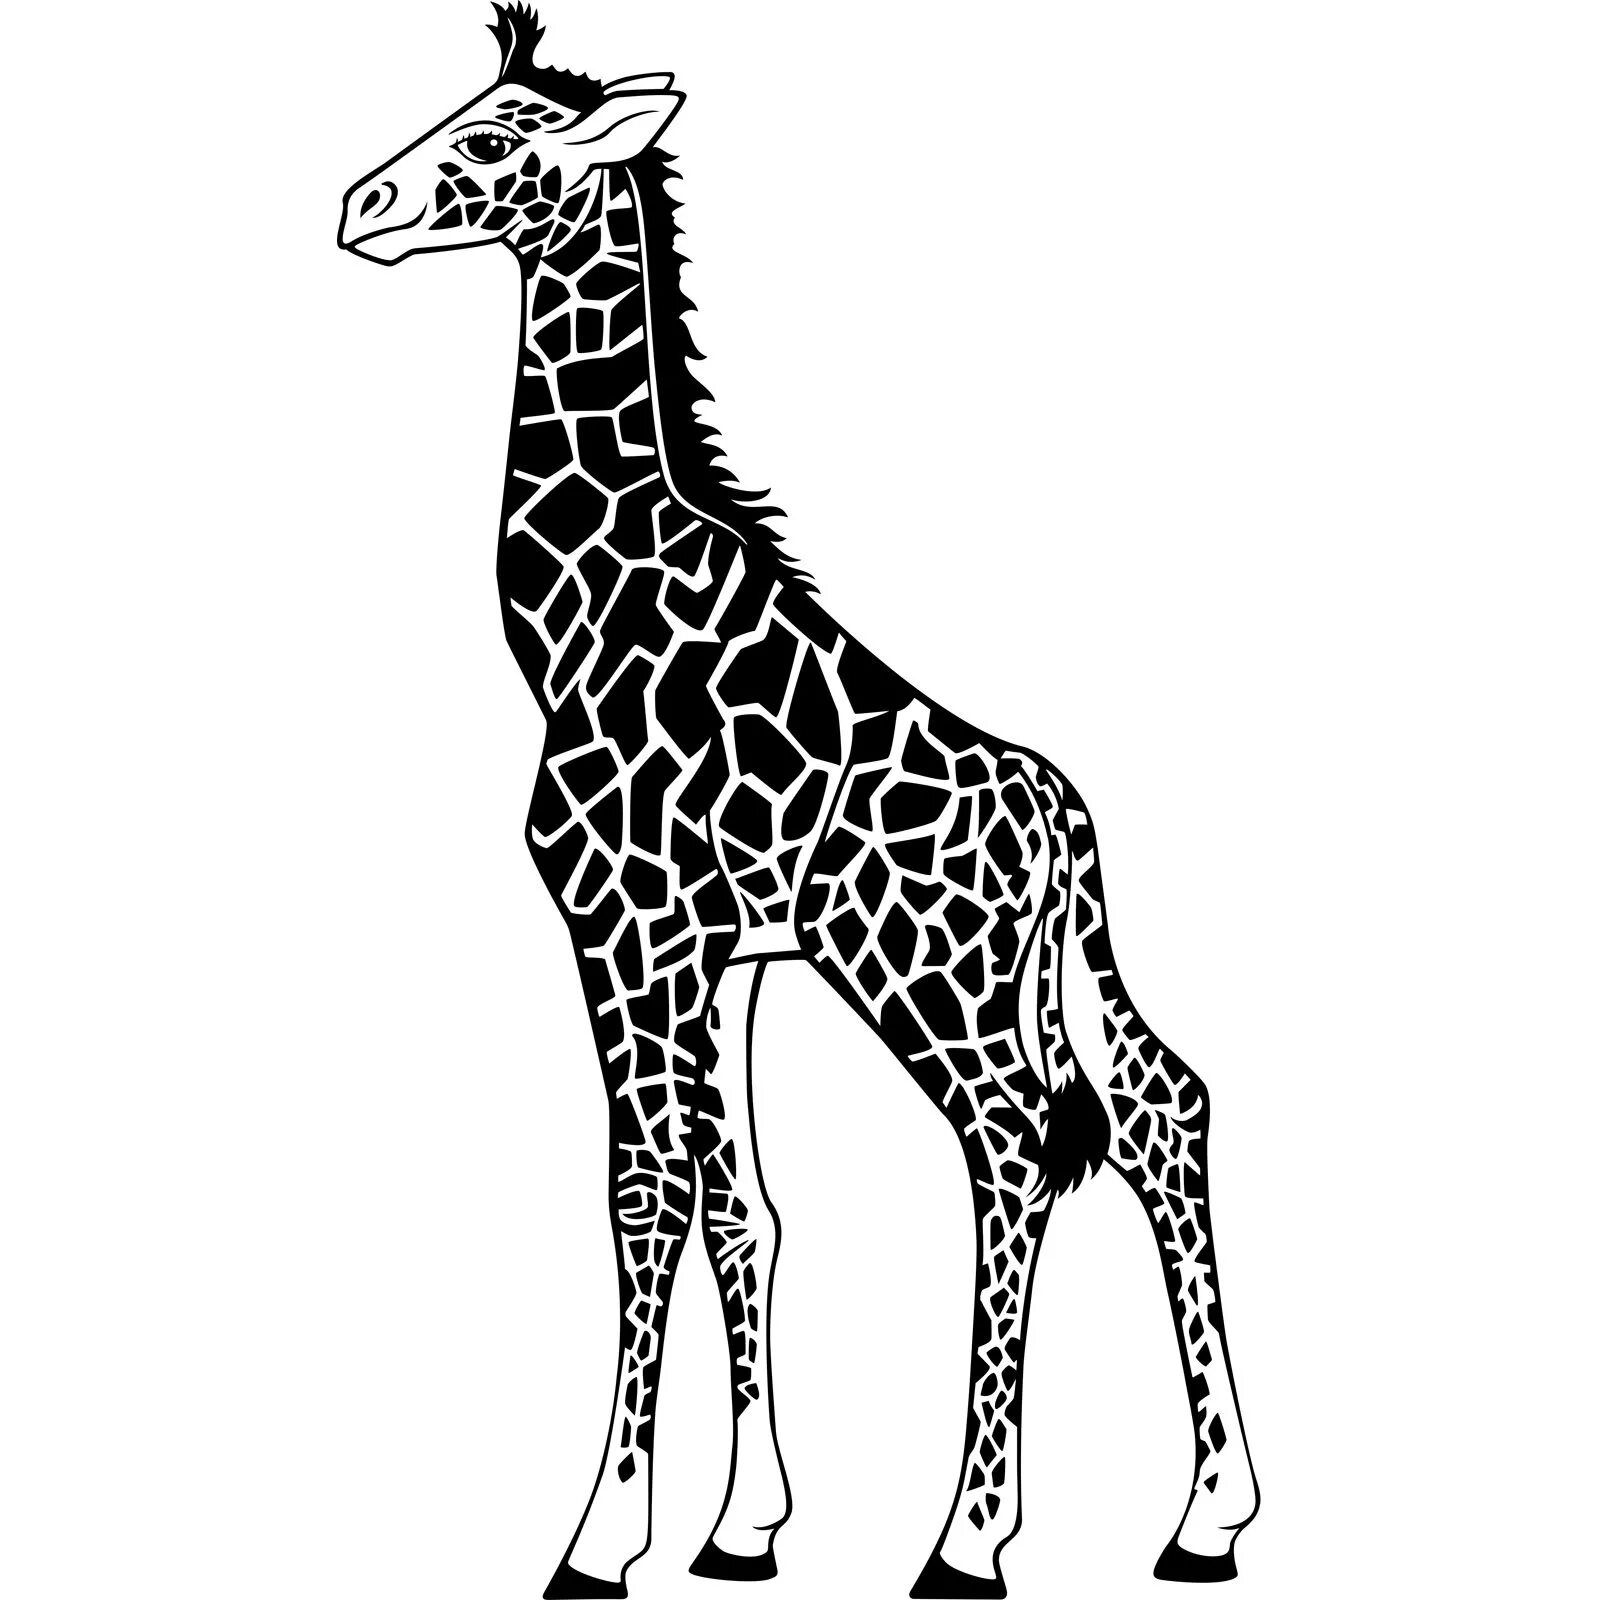 Stand animal. Жираф трафарет. Силуэт жирафа. Жираф стилизация. Черный силуэт жирафа.